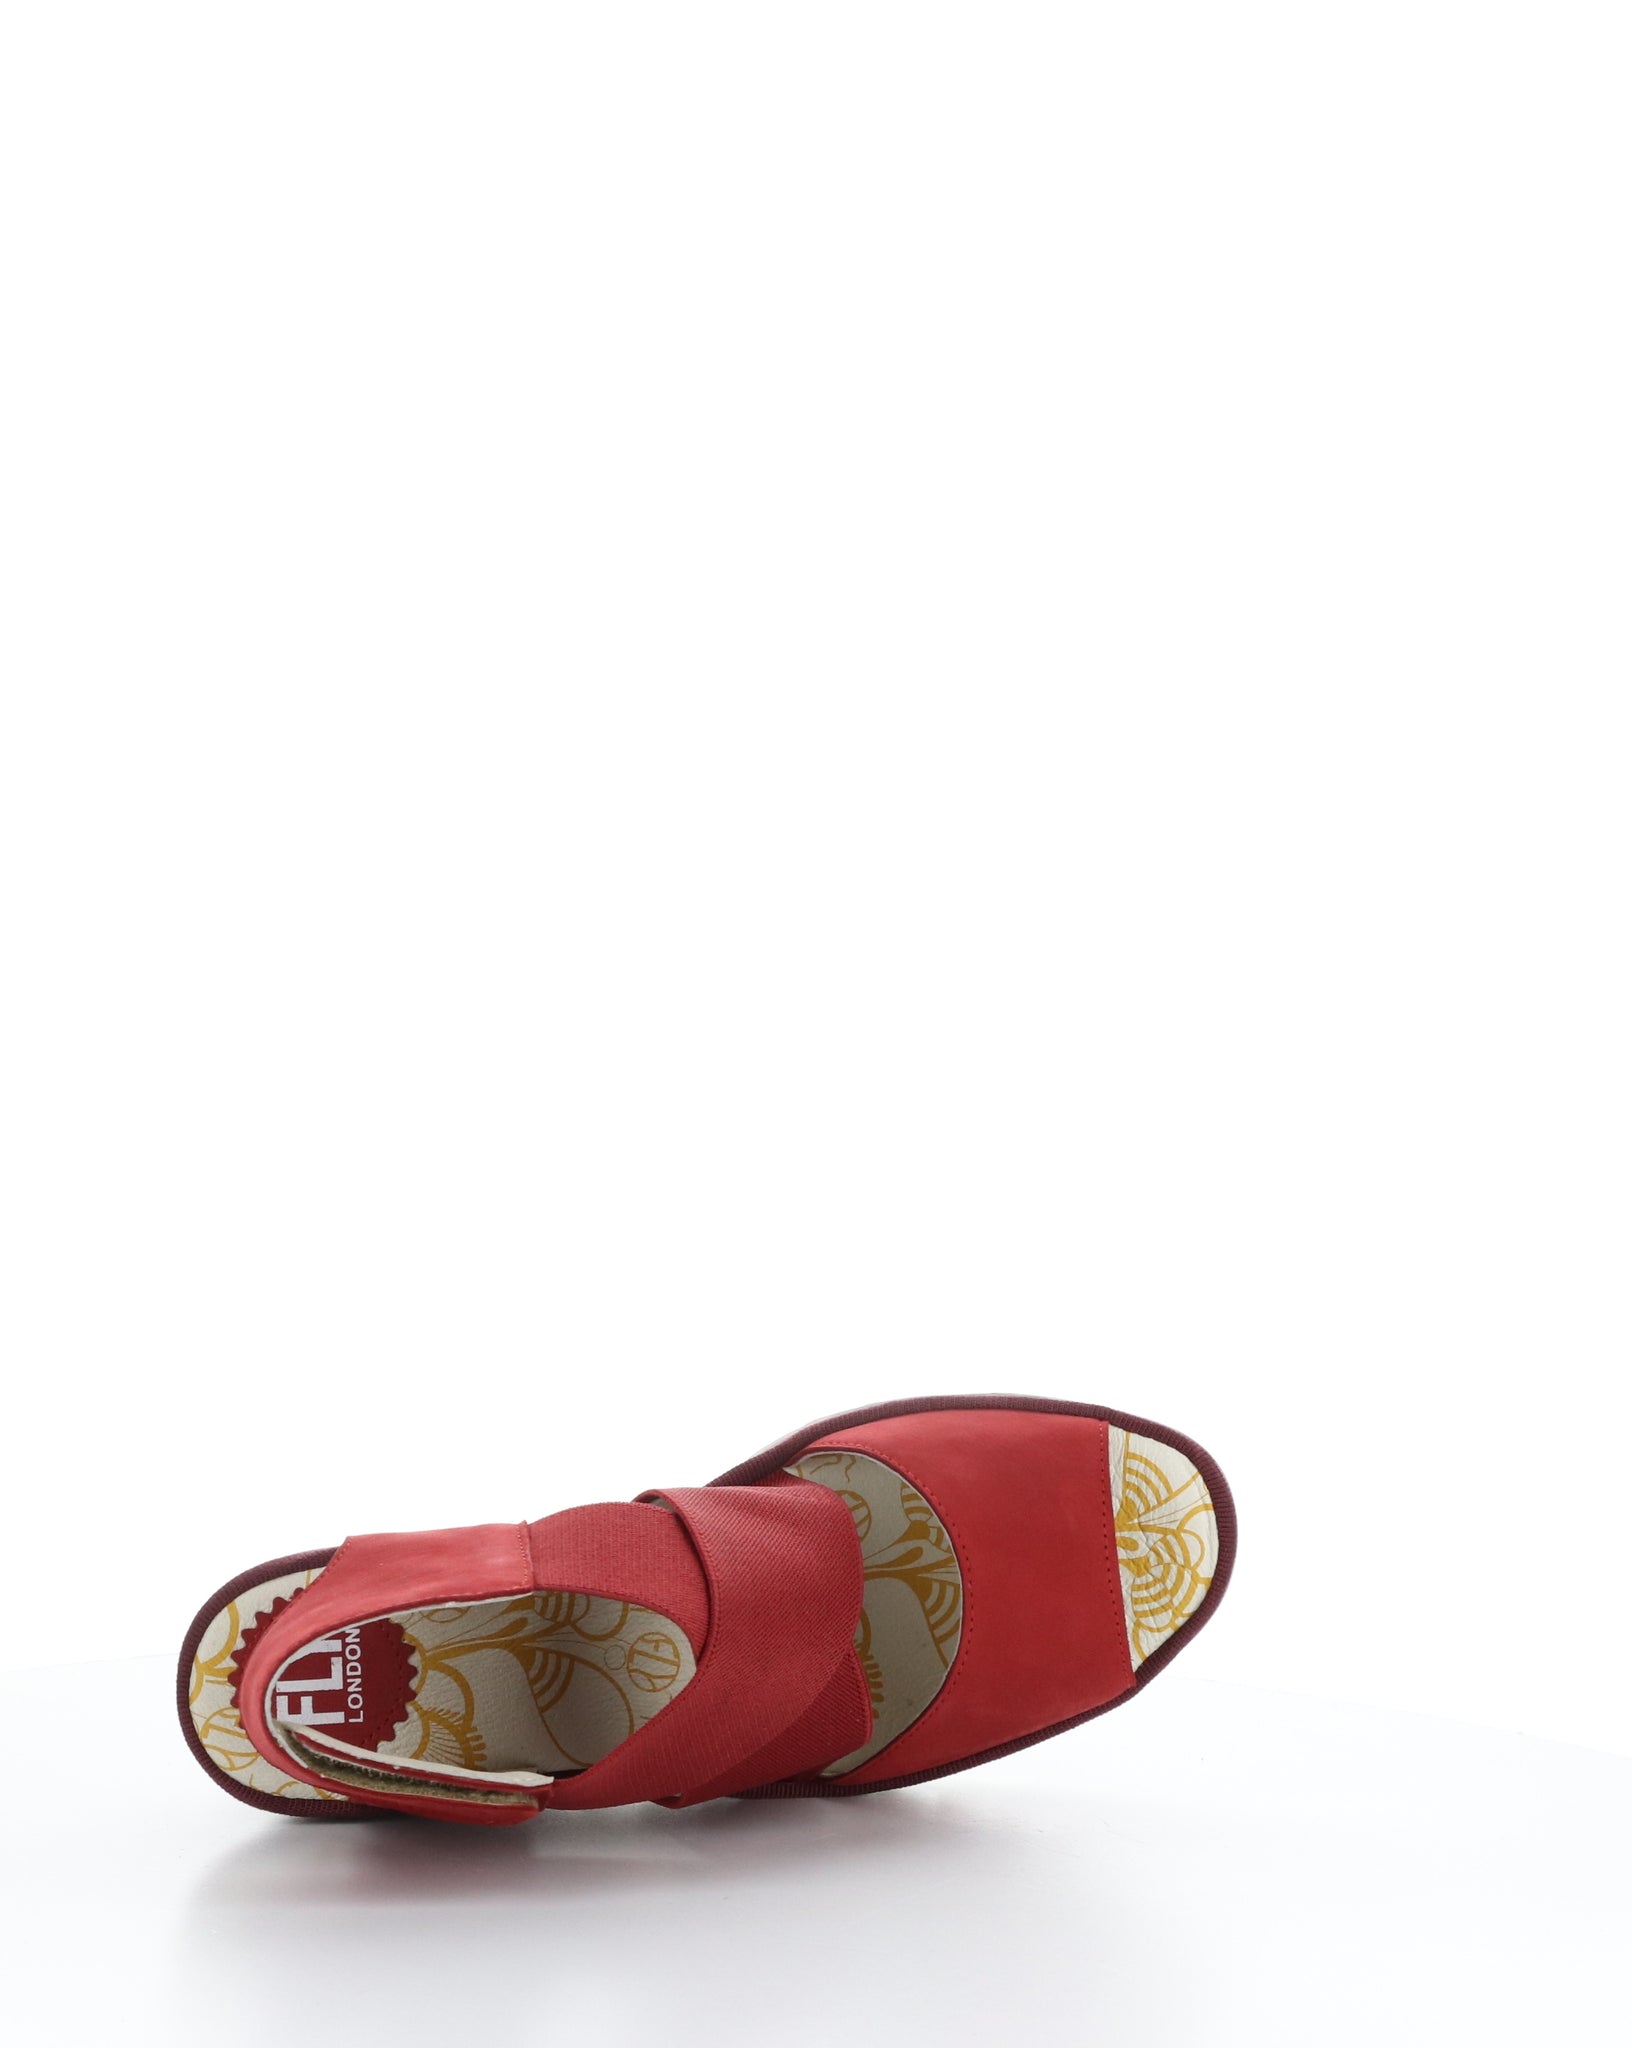 Fly London "YUBA" Red leather/stretch elastic Sandal